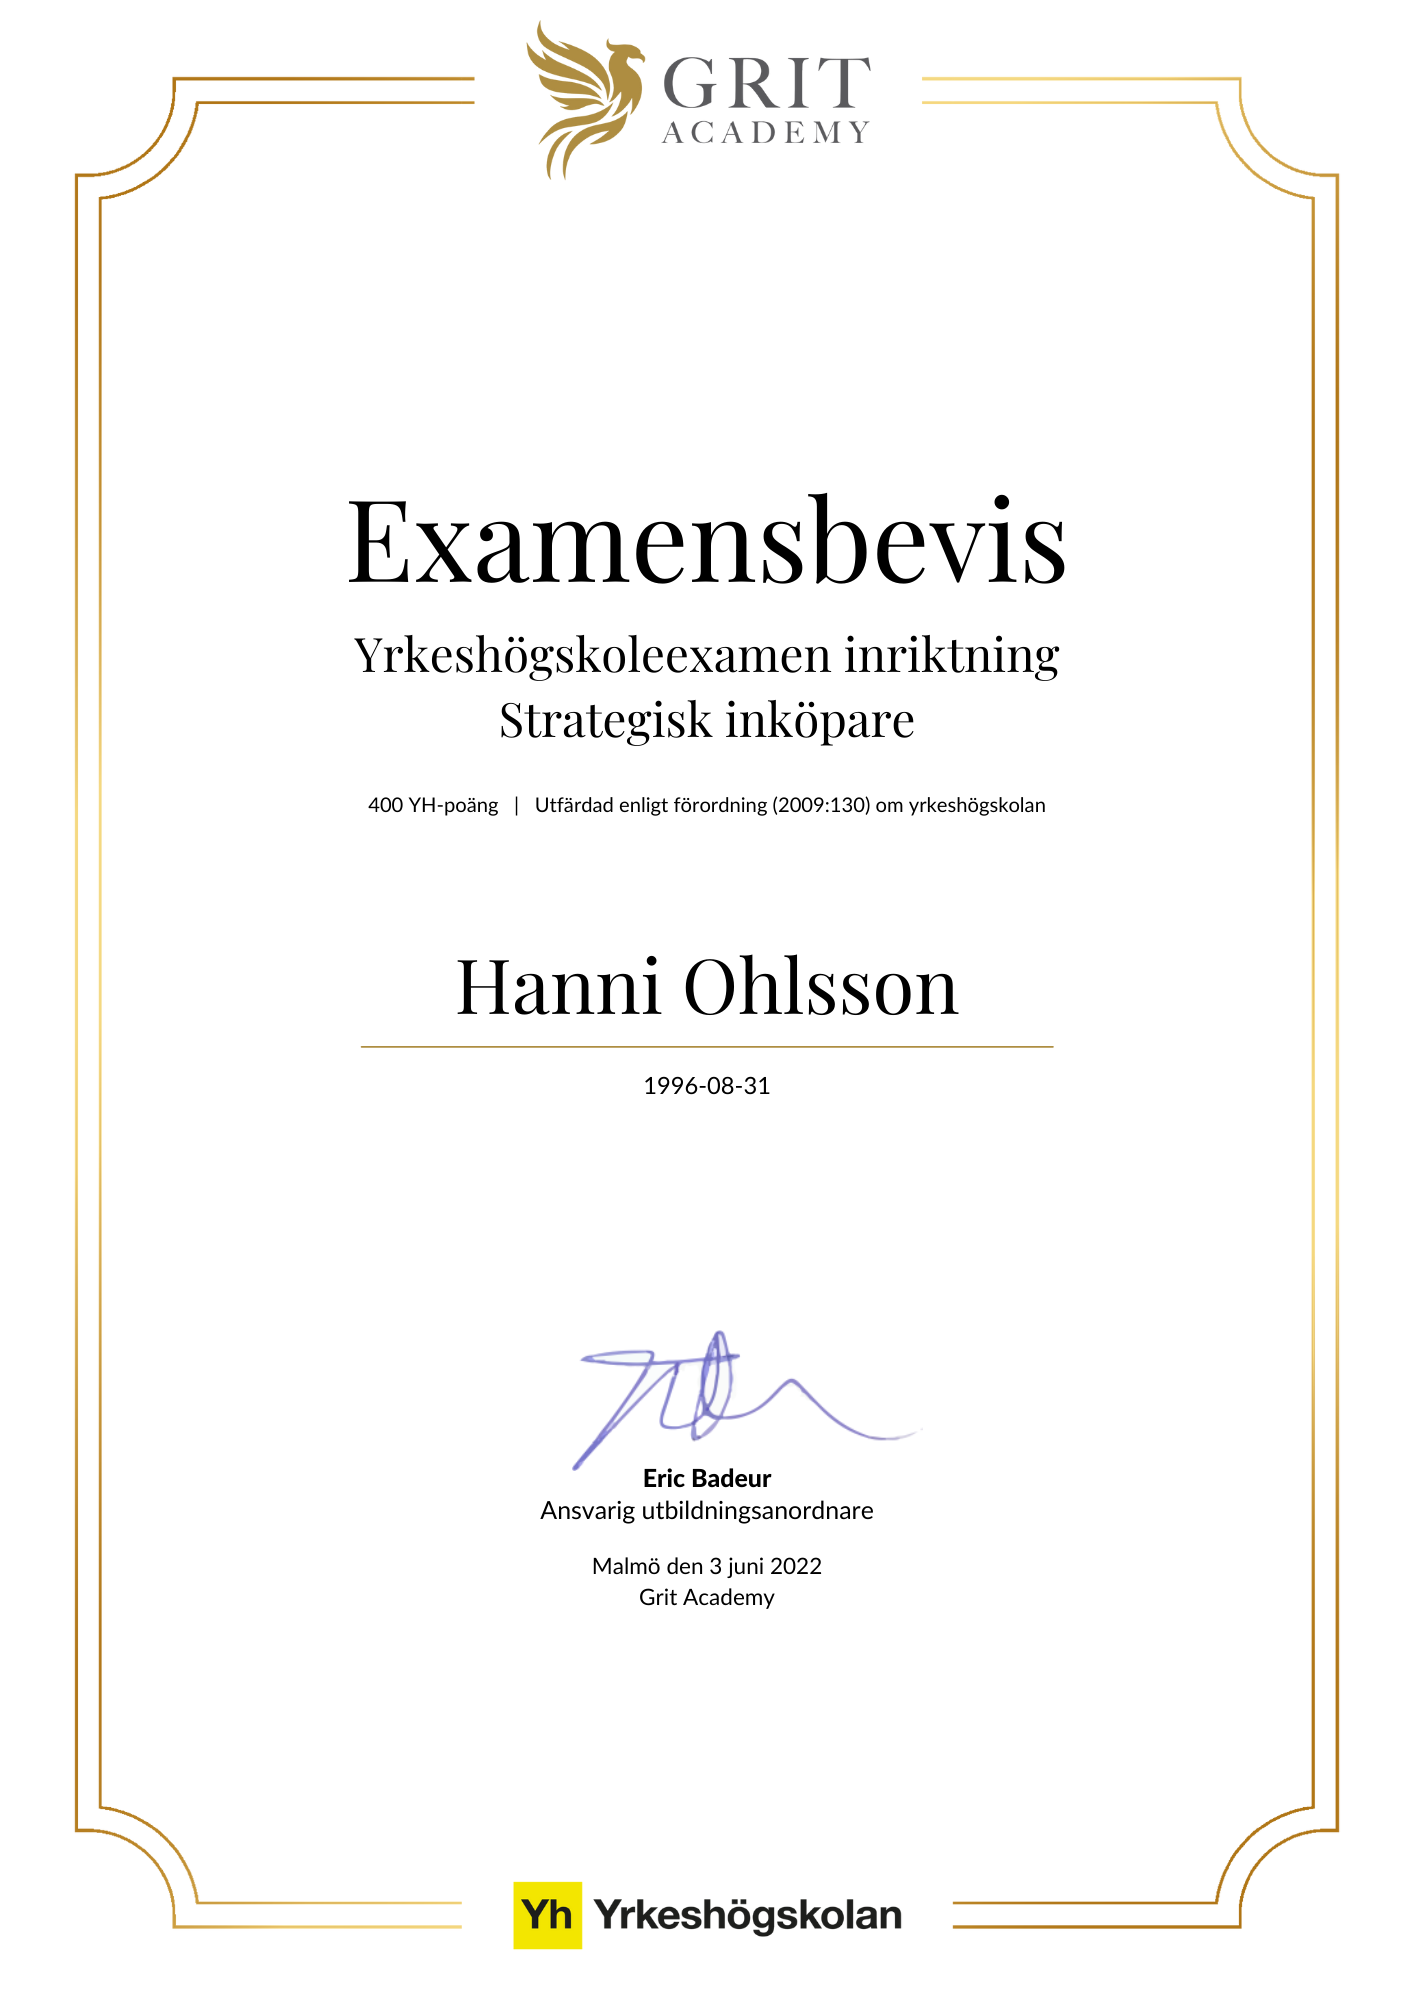 Examensbevis Hanni Ohlsson - 1